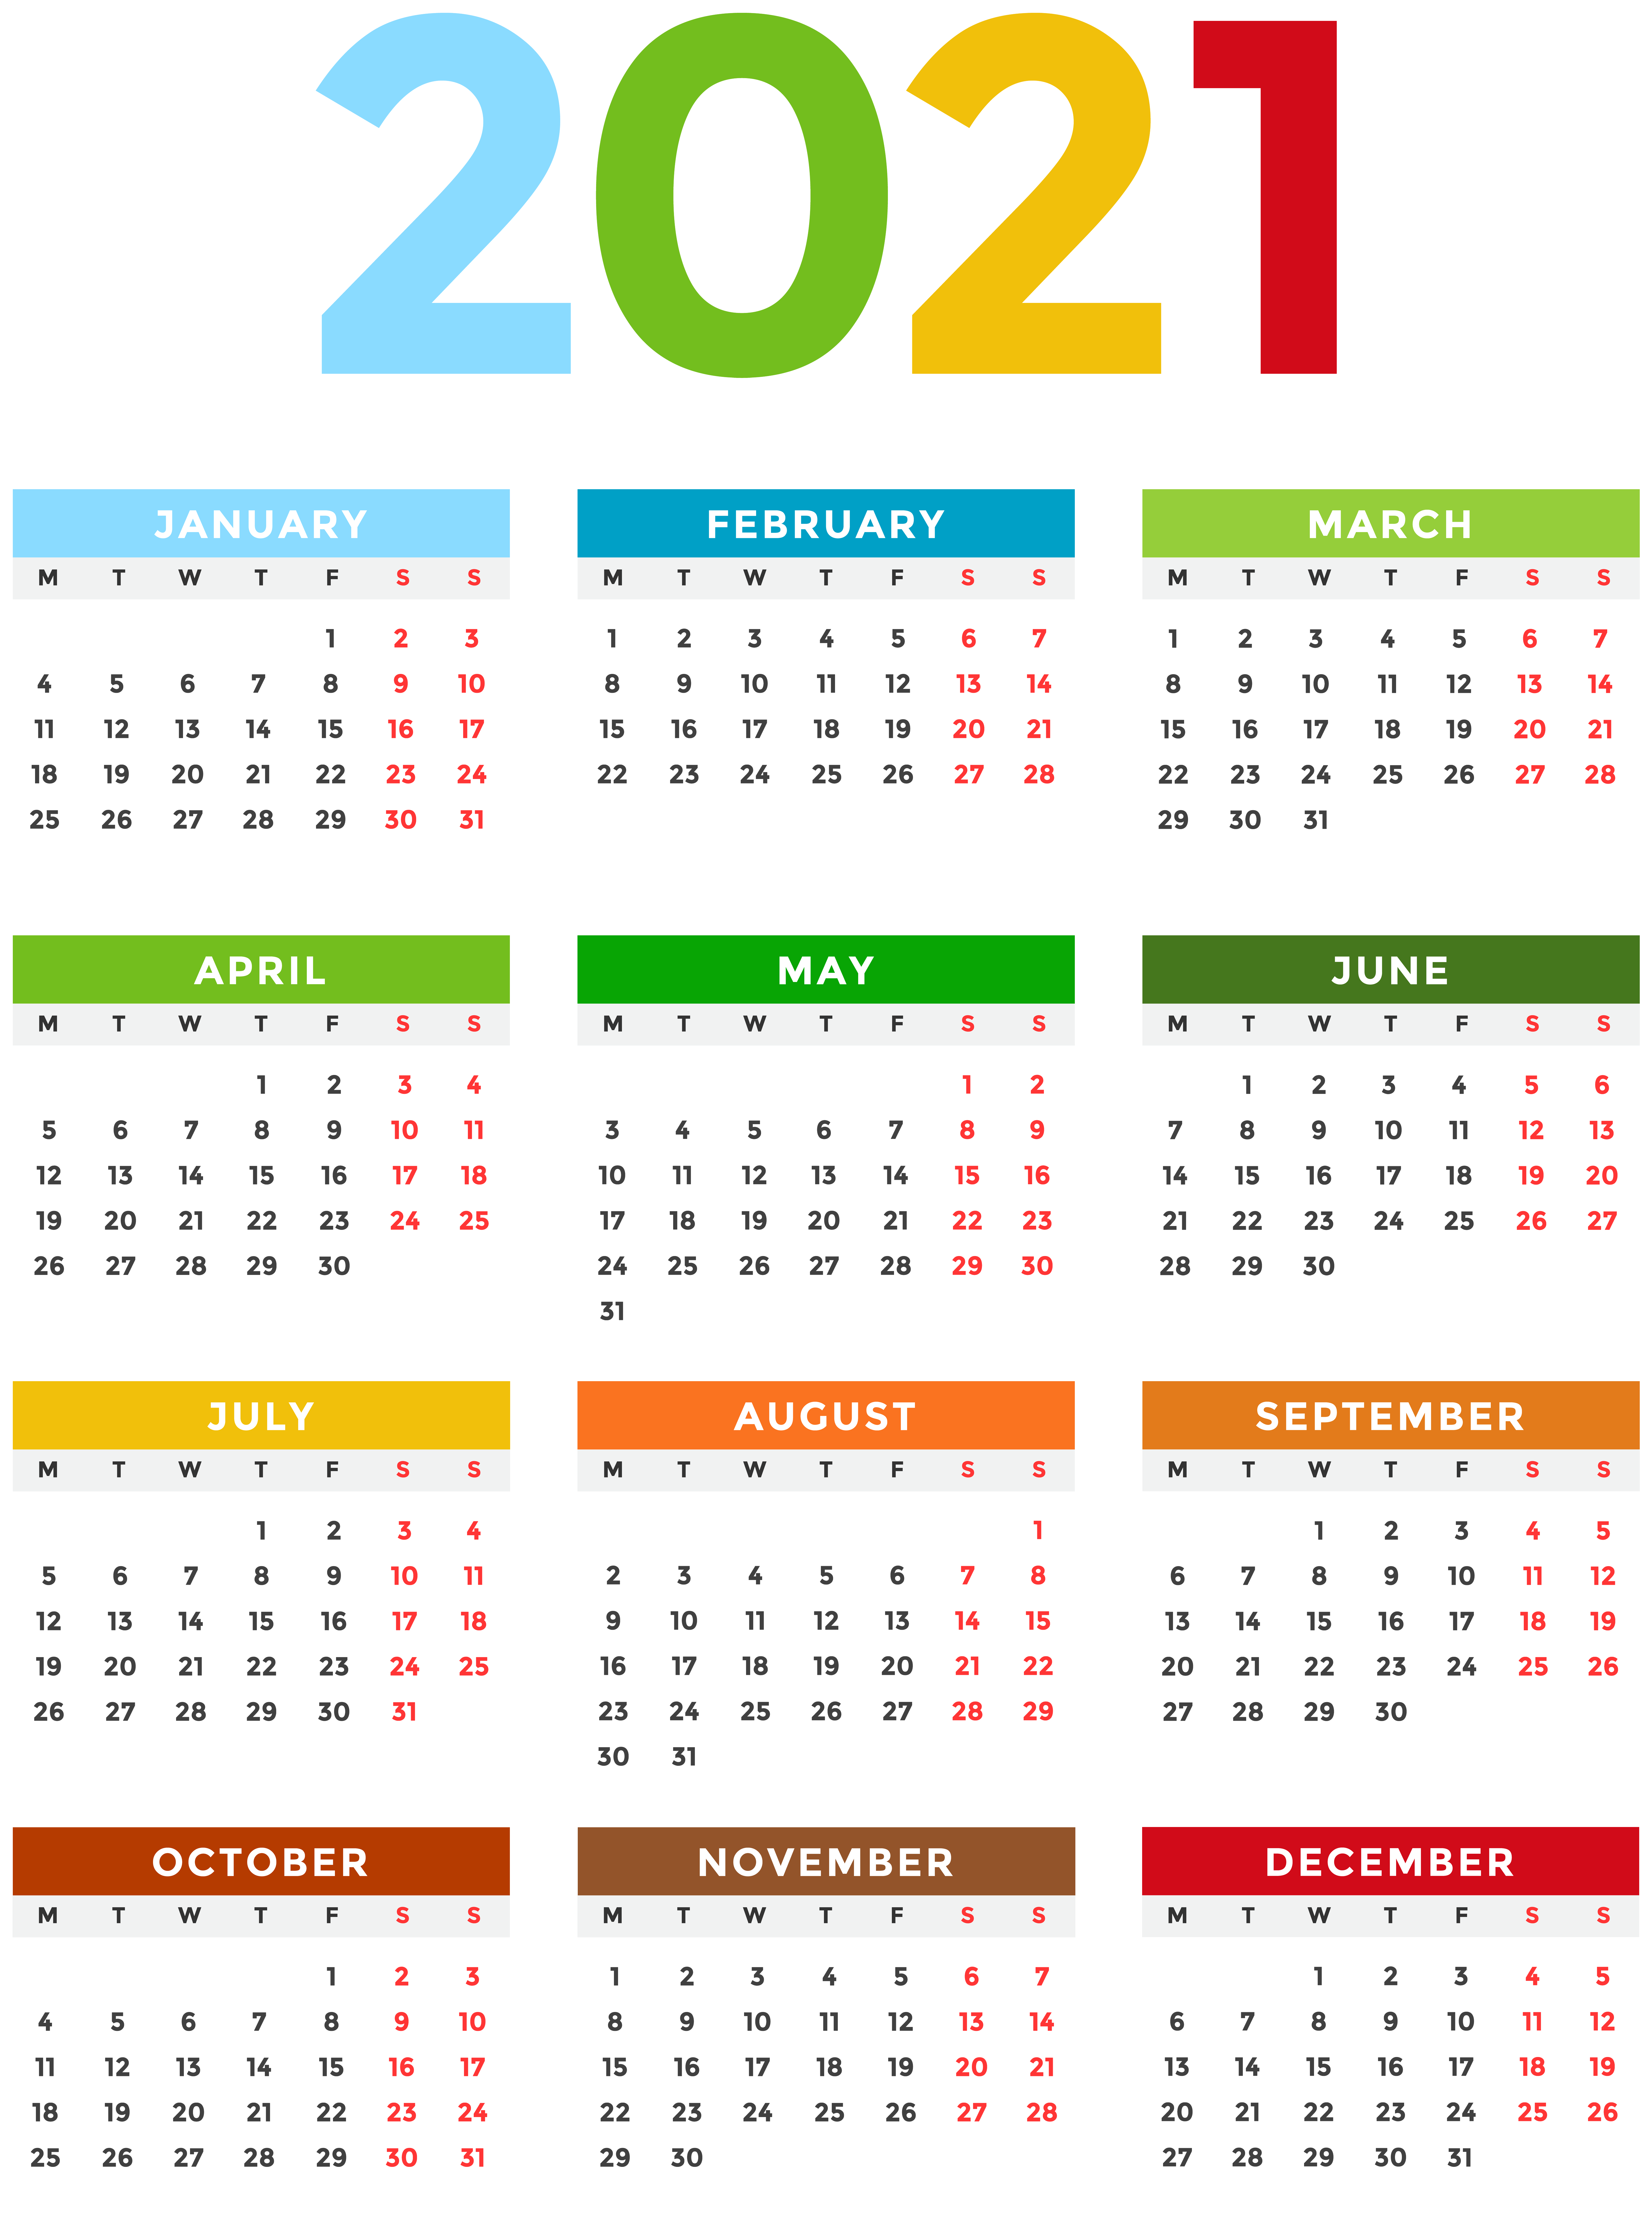 2021 Calendar EU Colorful Transparent Image | Gallery Yopriceville ...